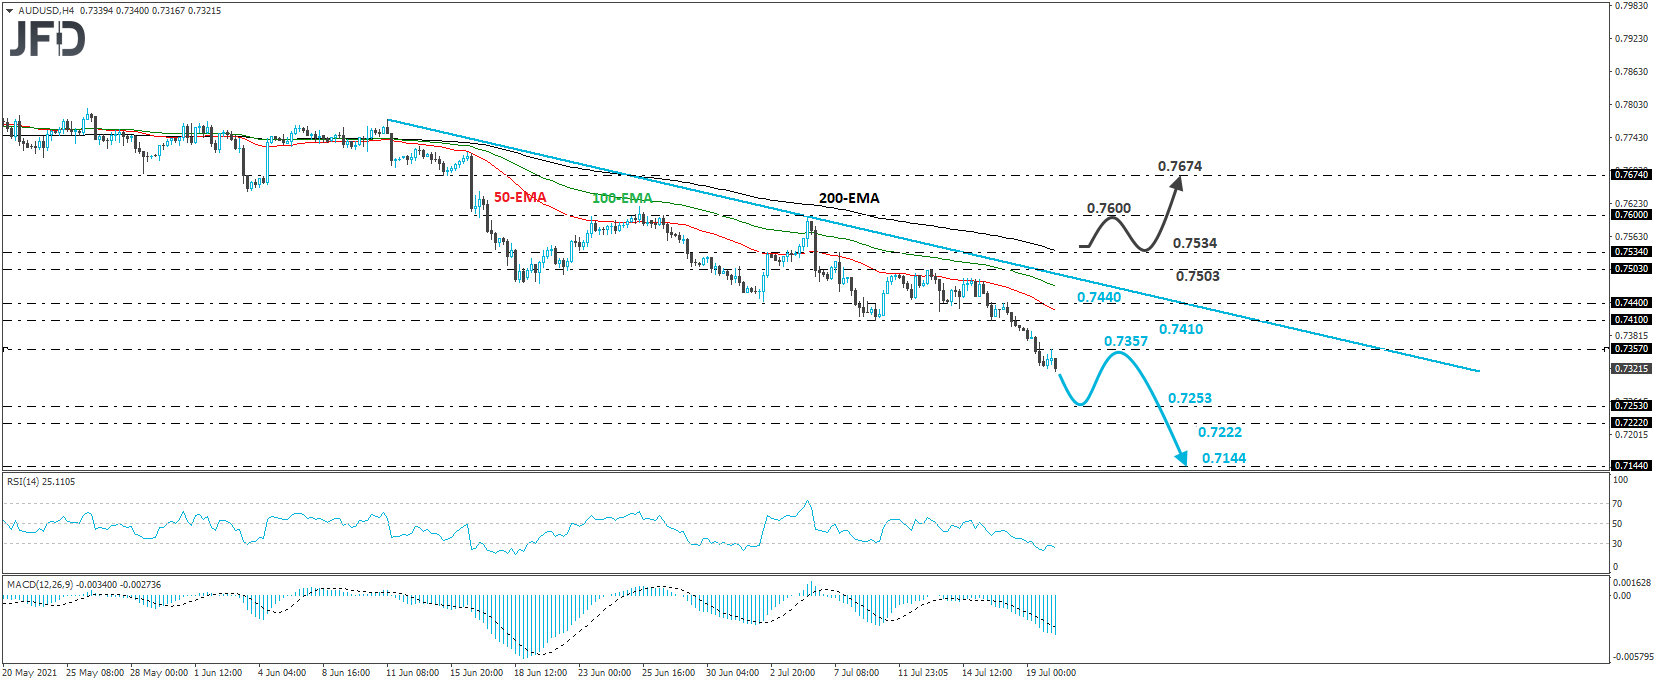 AUD/USD 4-horu chart technical analysis